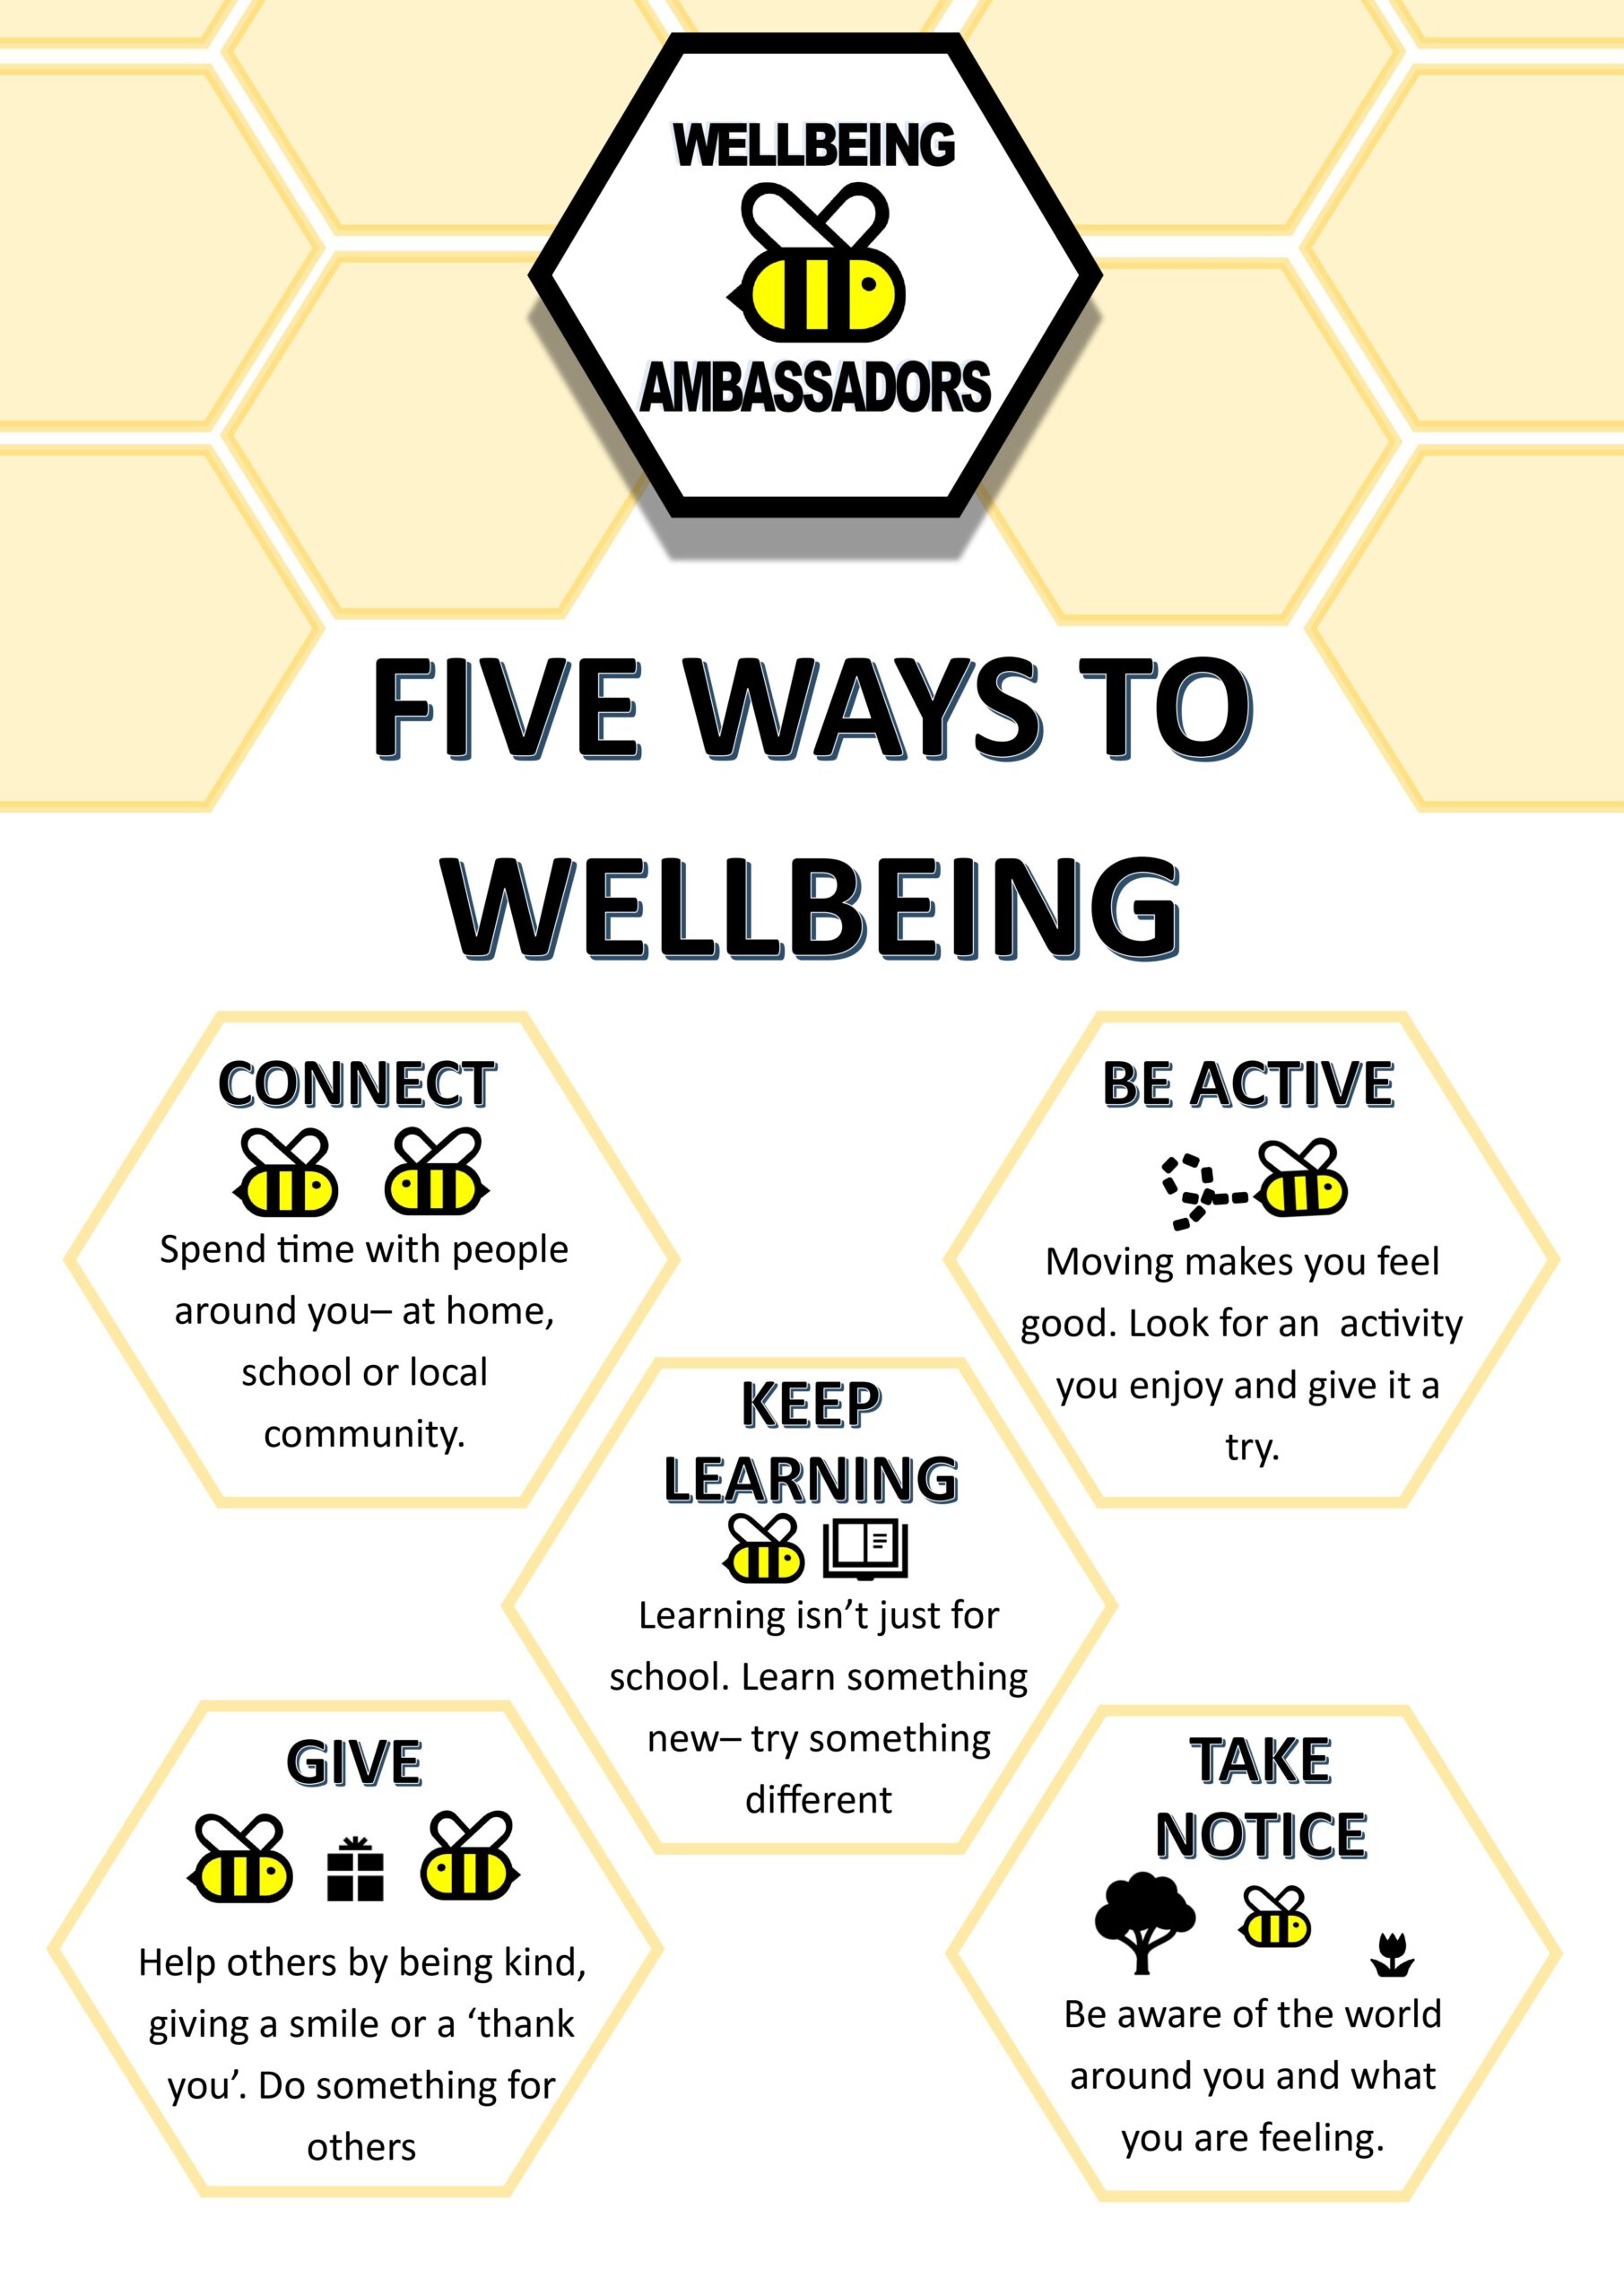 Wellbeing Ambassador poster 2